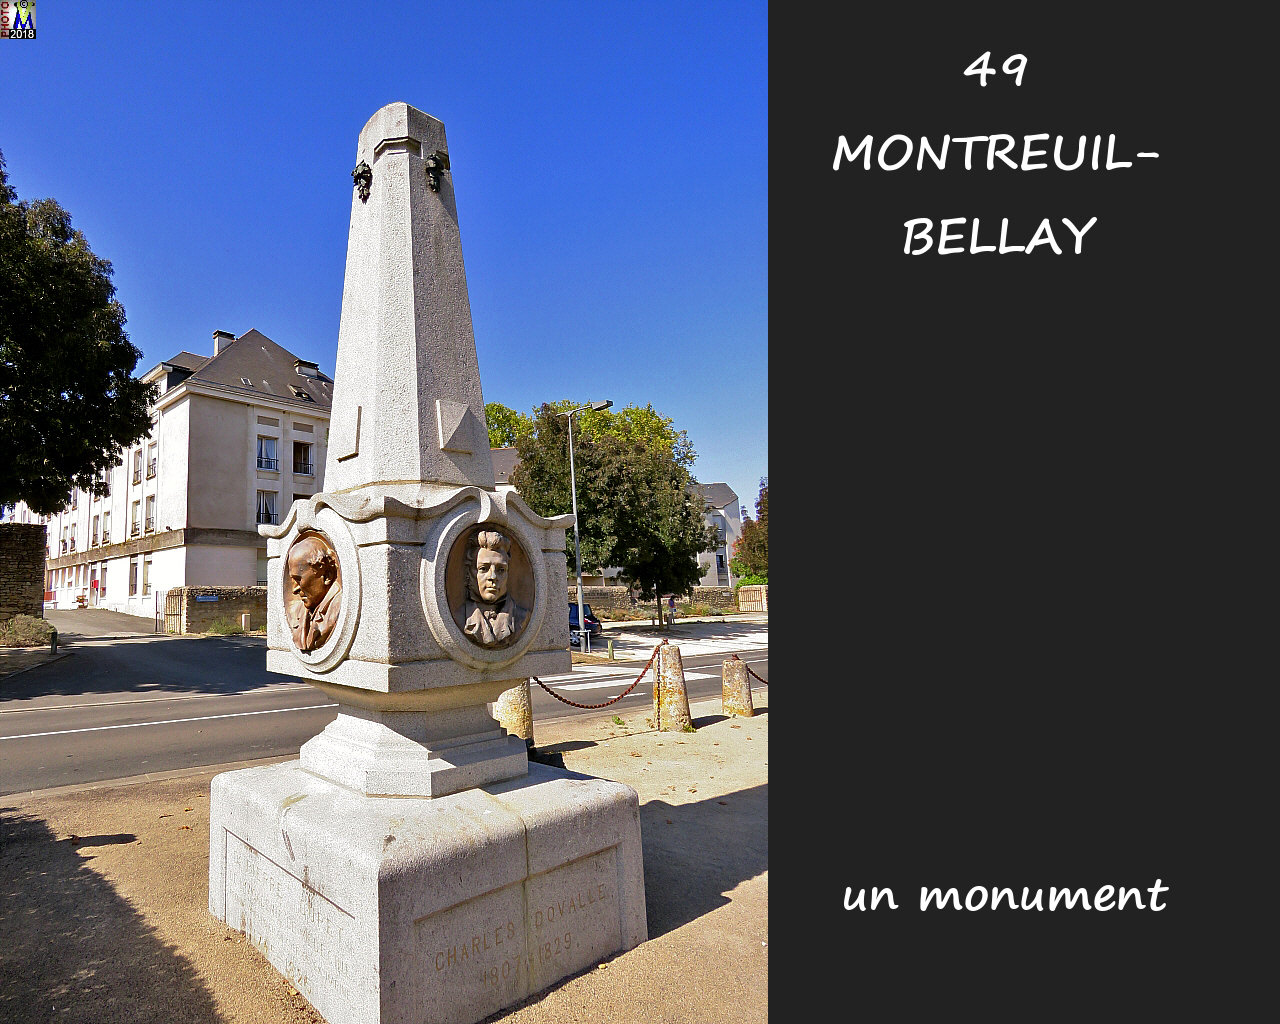 49MONTREUIL-BELLAY_monument_1000.jpg